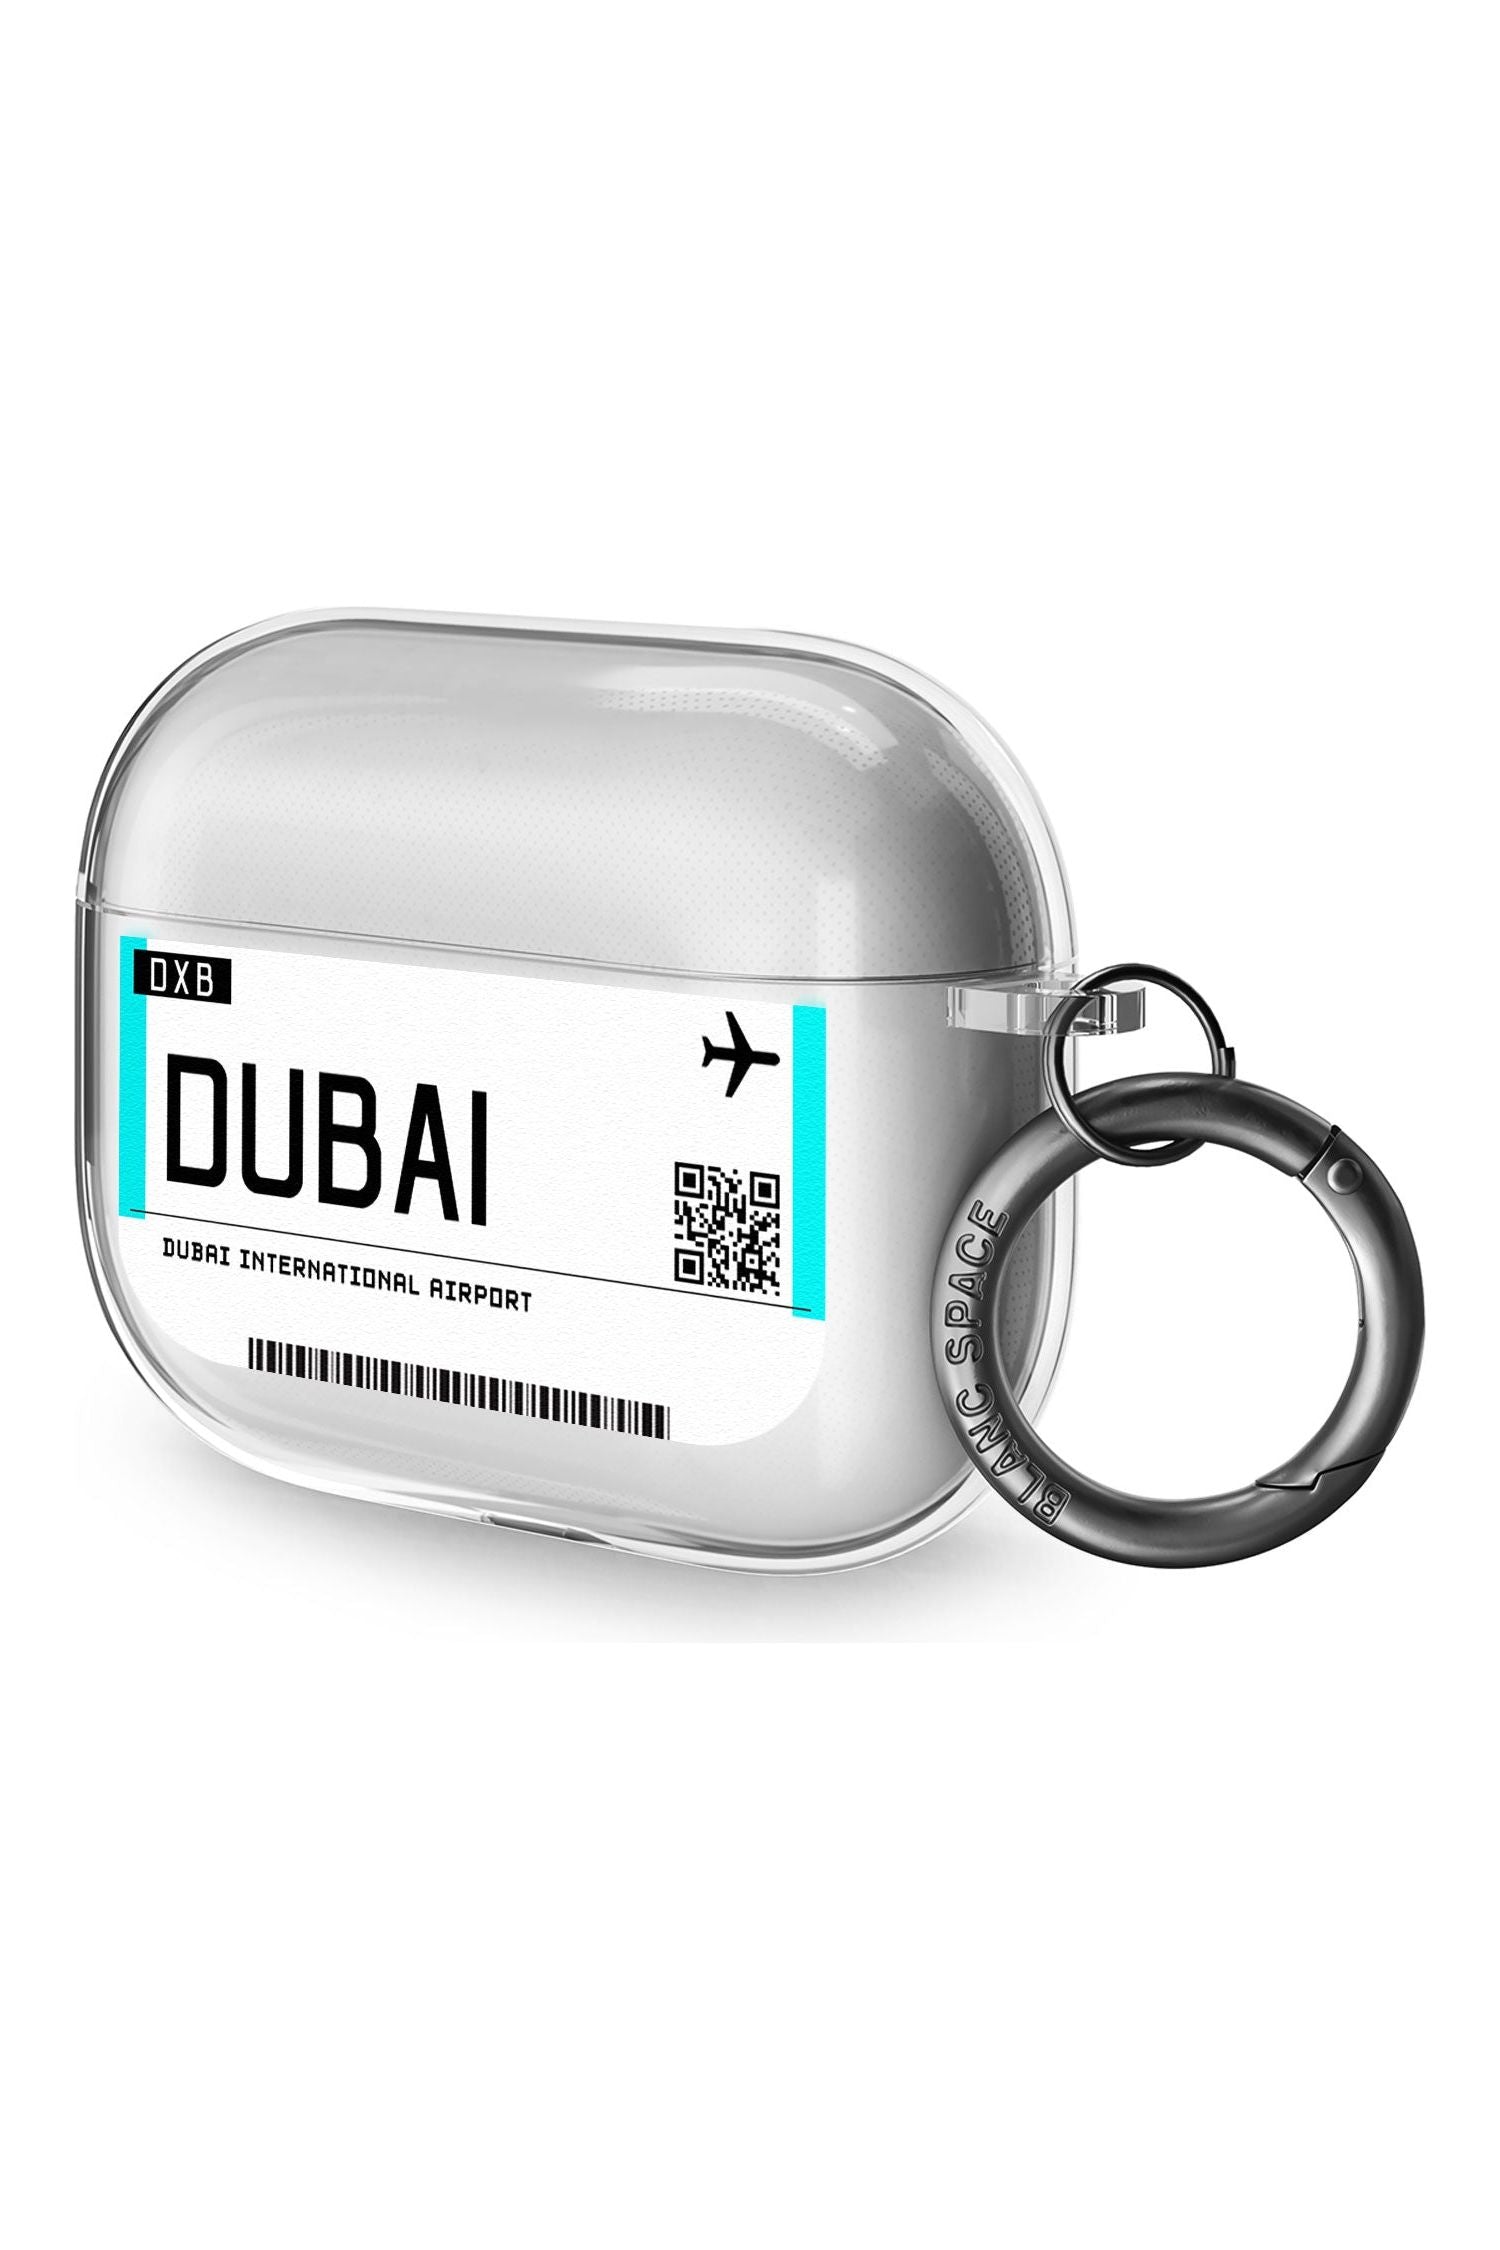 Dubai Boarding Pass Airpods Pro Case